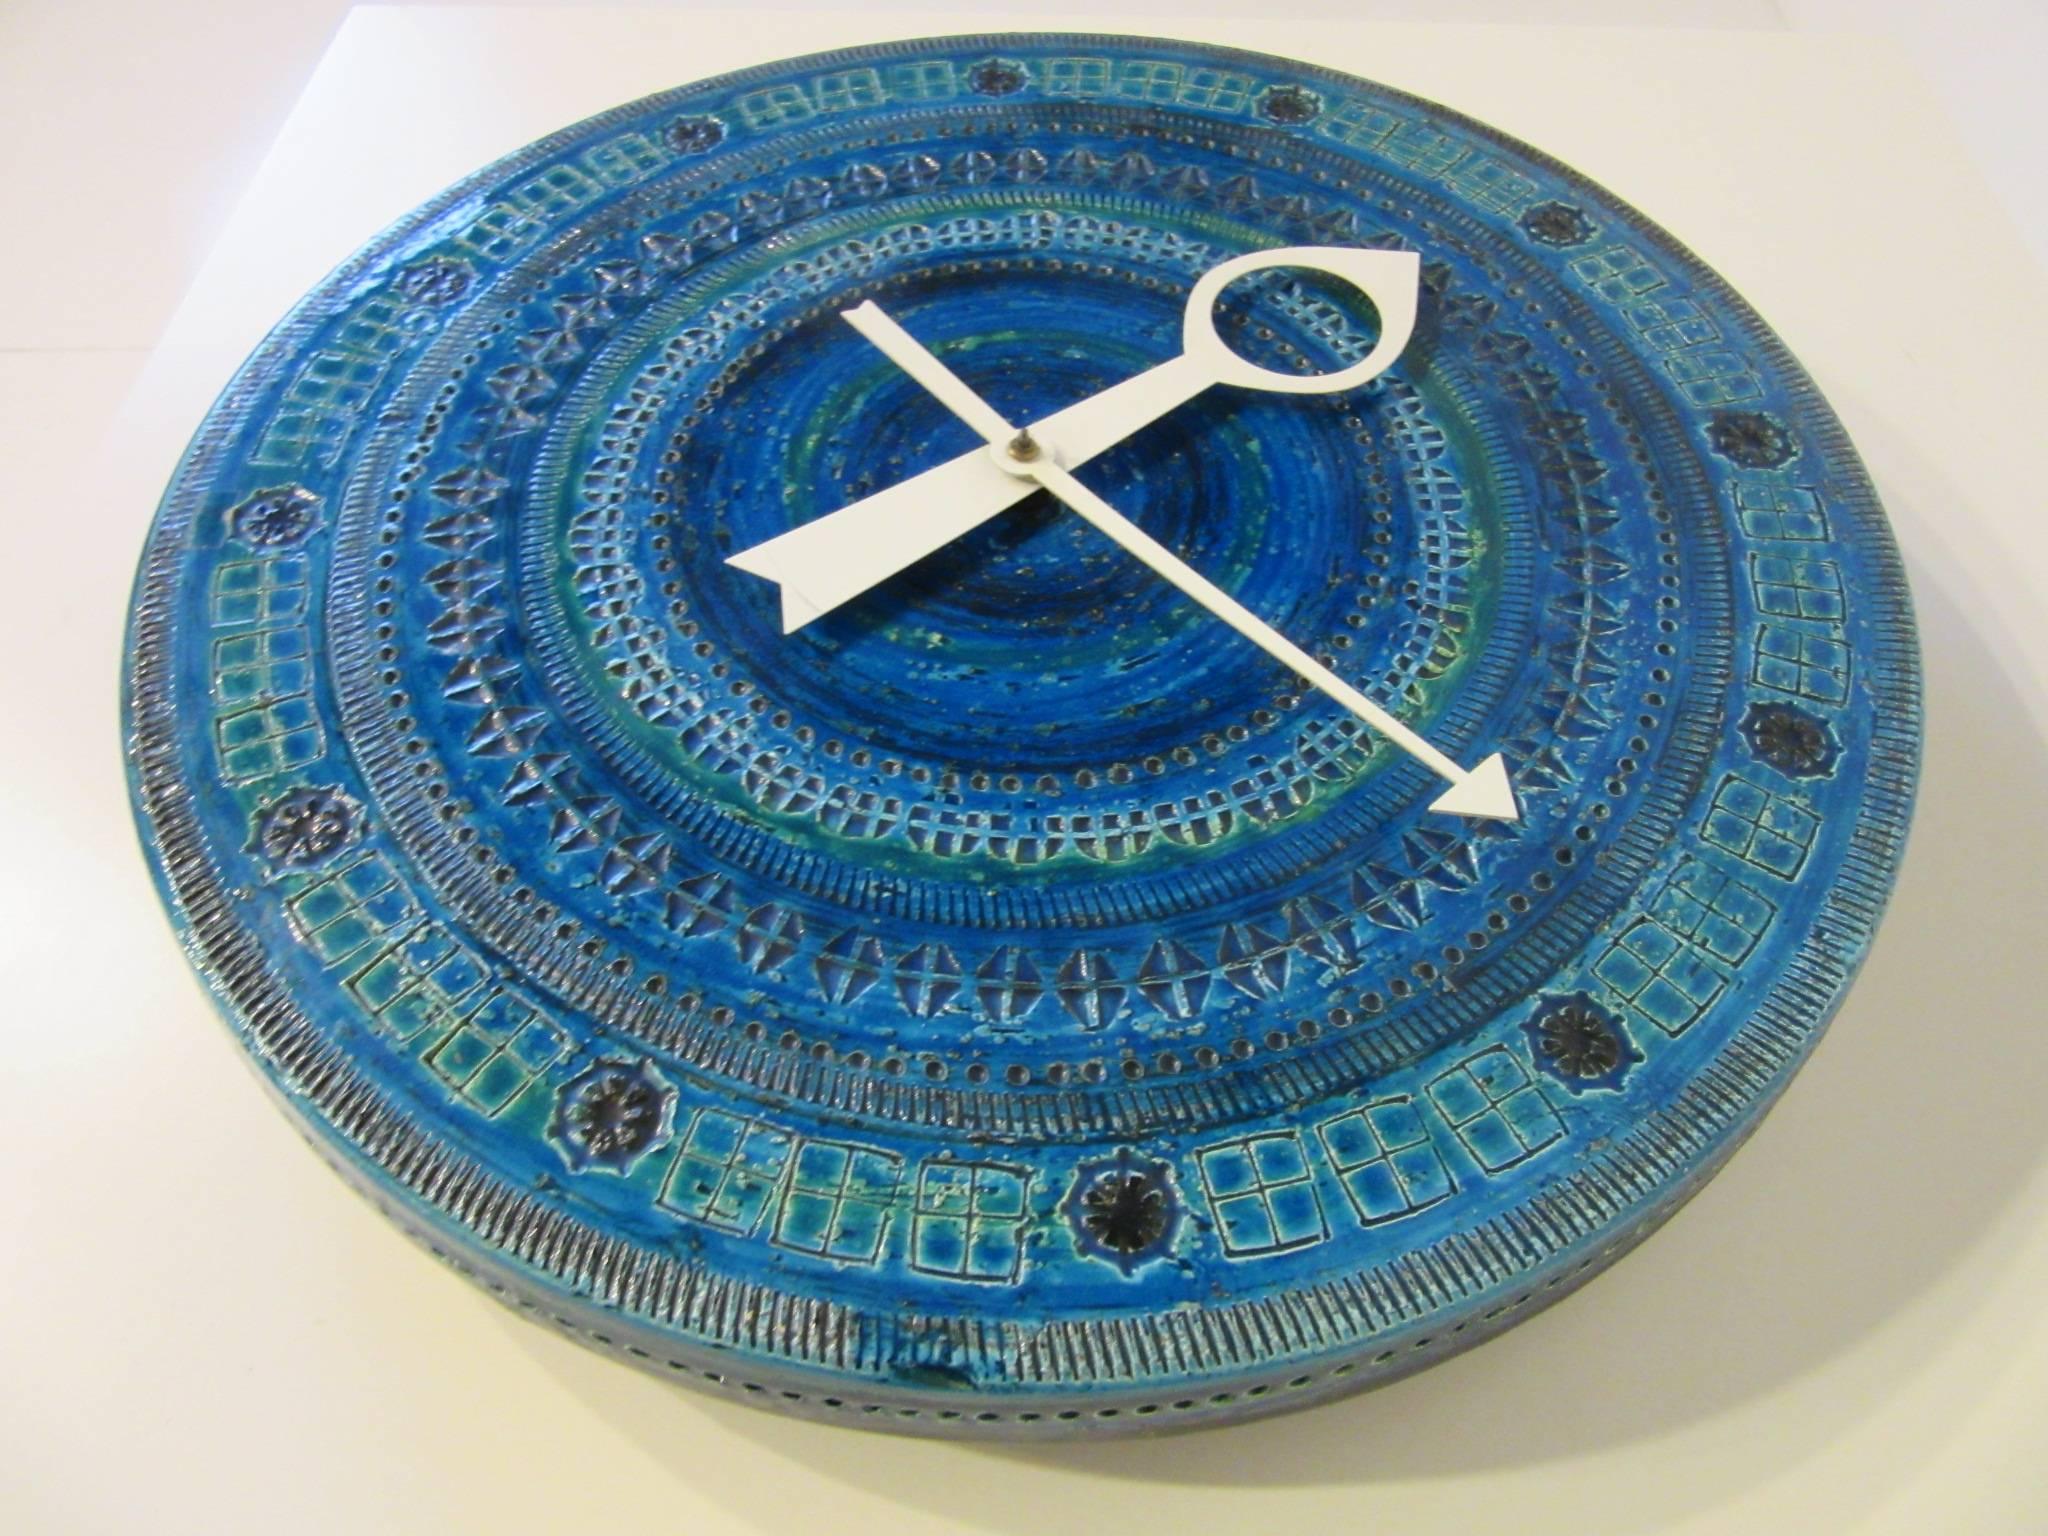 20th Century Howard Miller Meridian Ceramic Clock by Bitossi Londi, Rimin